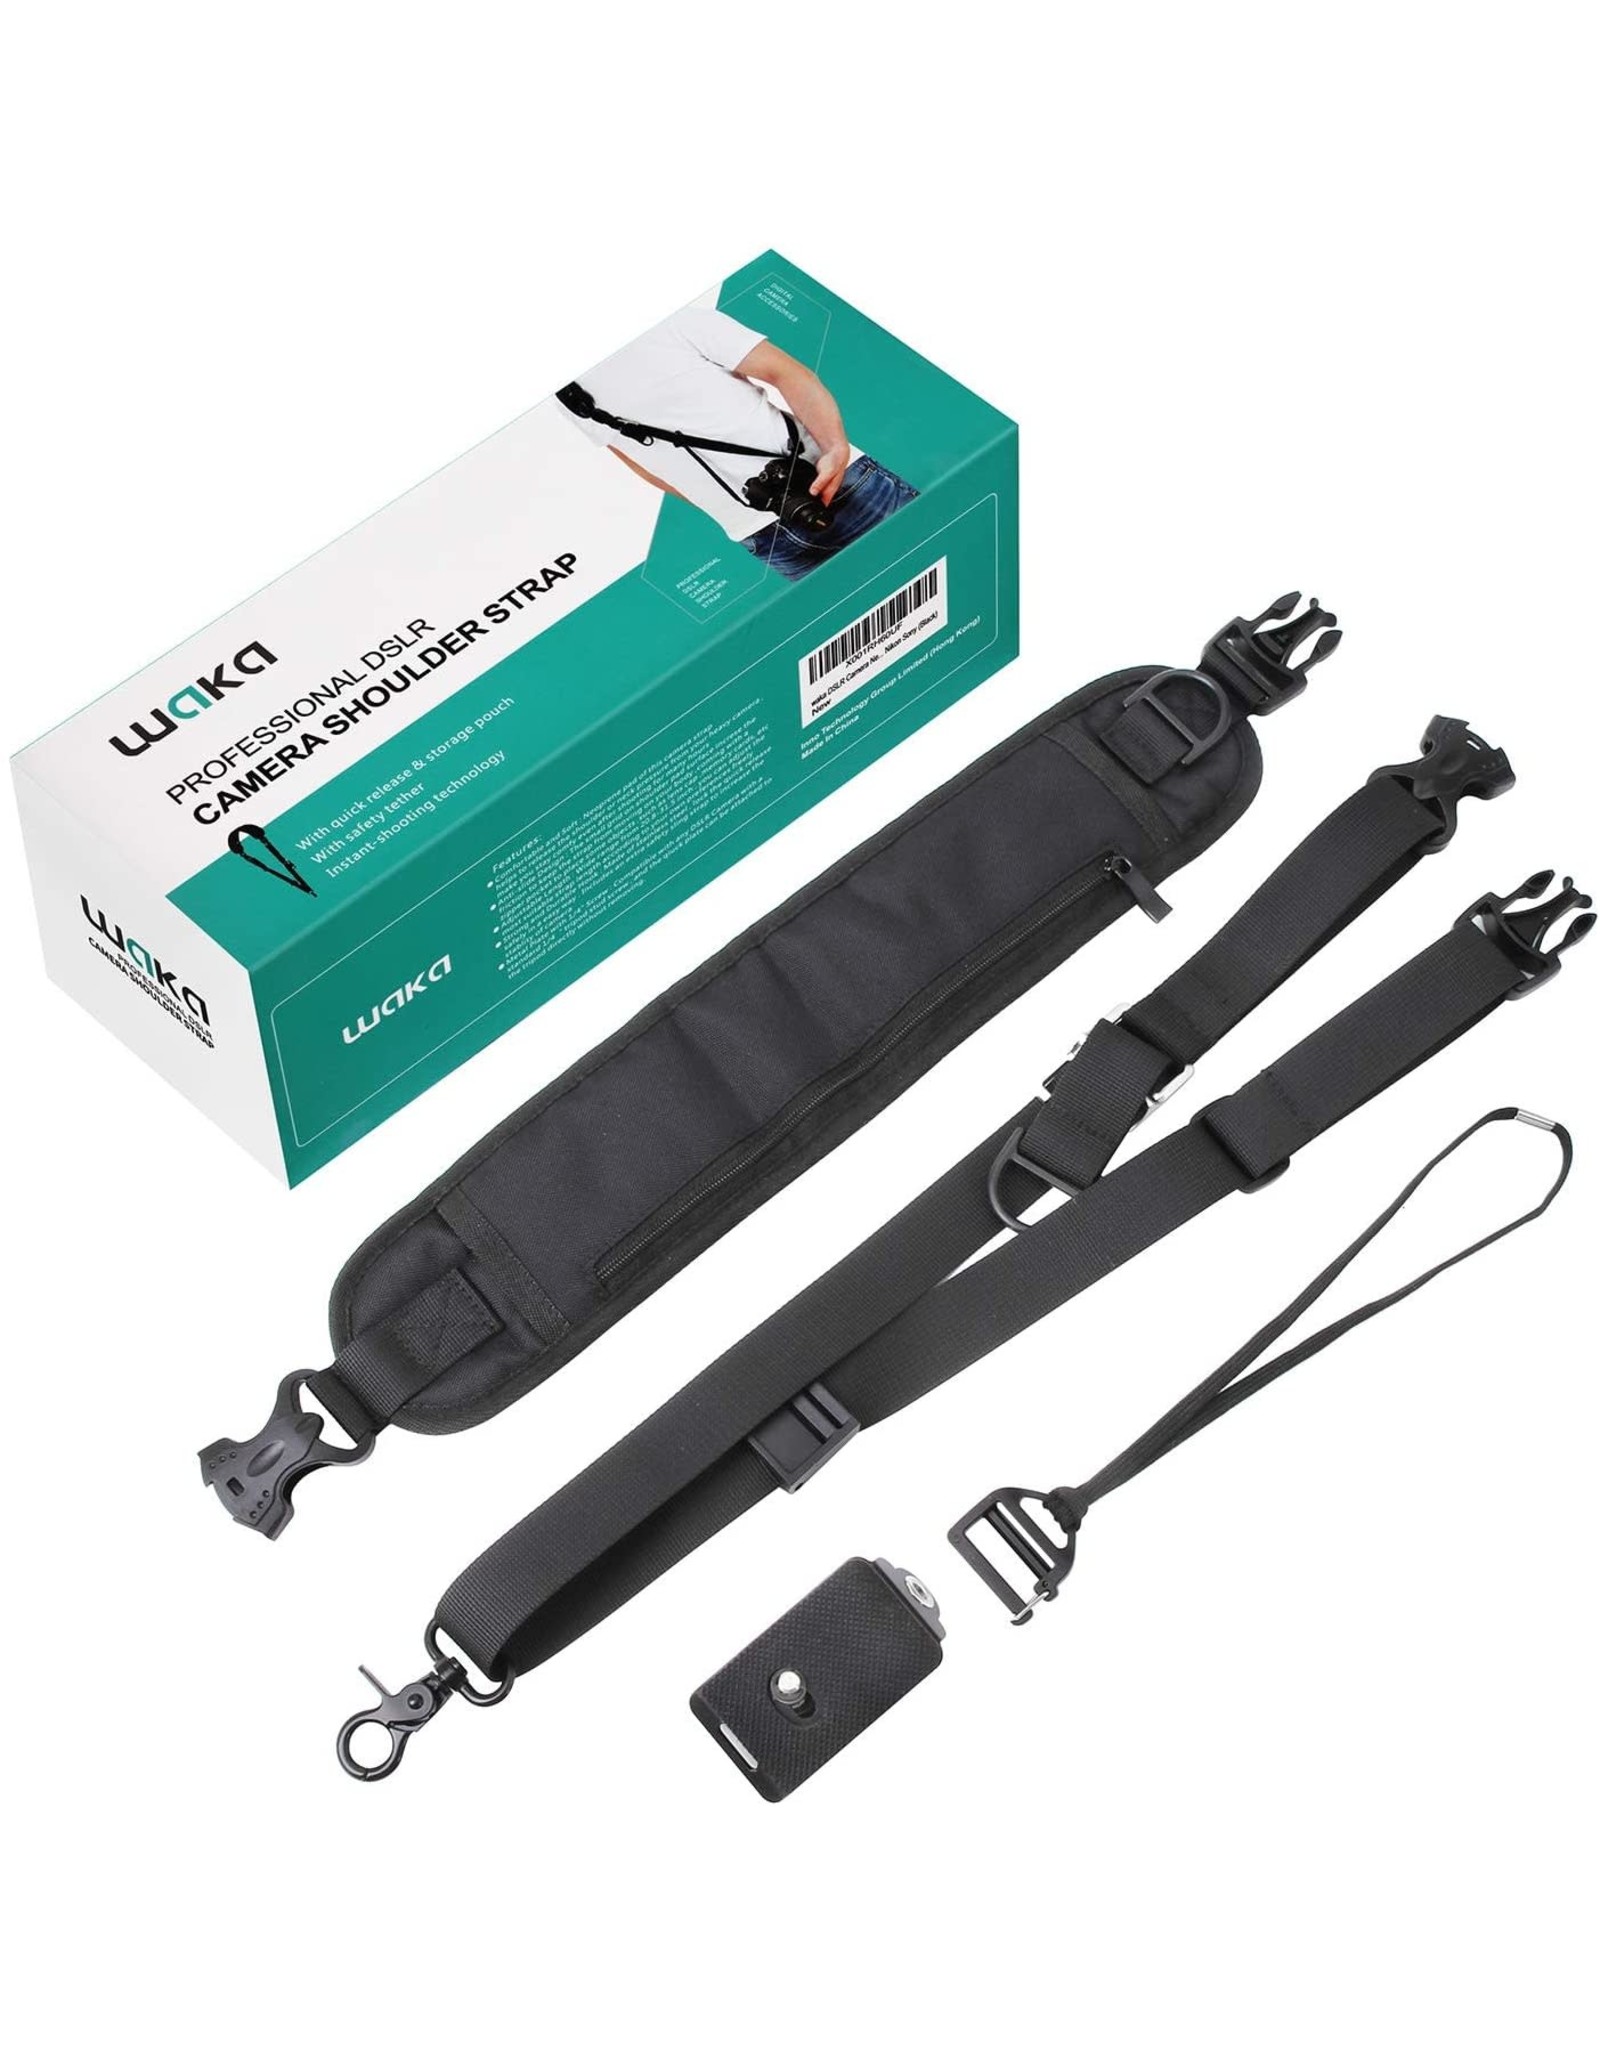 Waka Waka Rapid Camera Neck Strap with Quick Release and Safety Tether, Adjustable Camera Shoulder Sling Strap for  DSLR Cameras - Black